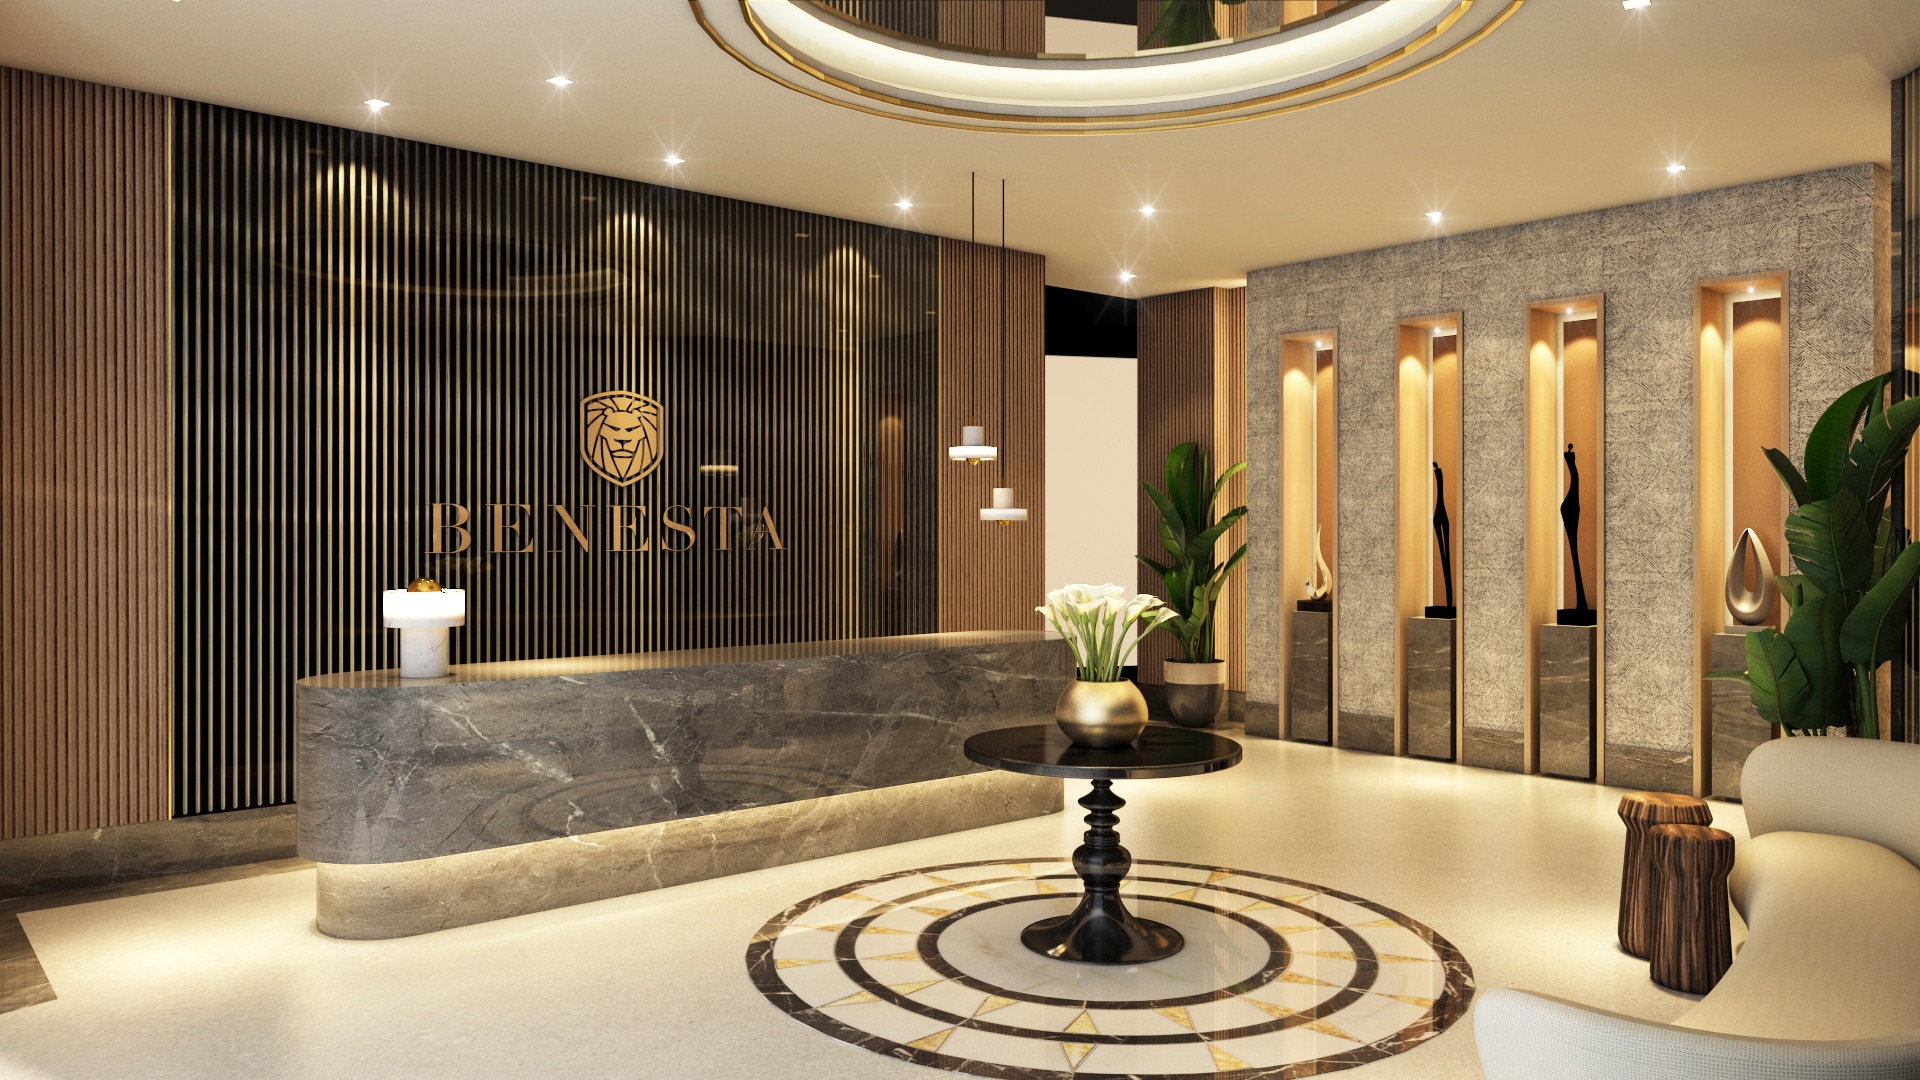 Benesta Beyoglu Apartments At Beyoglu Стамбул